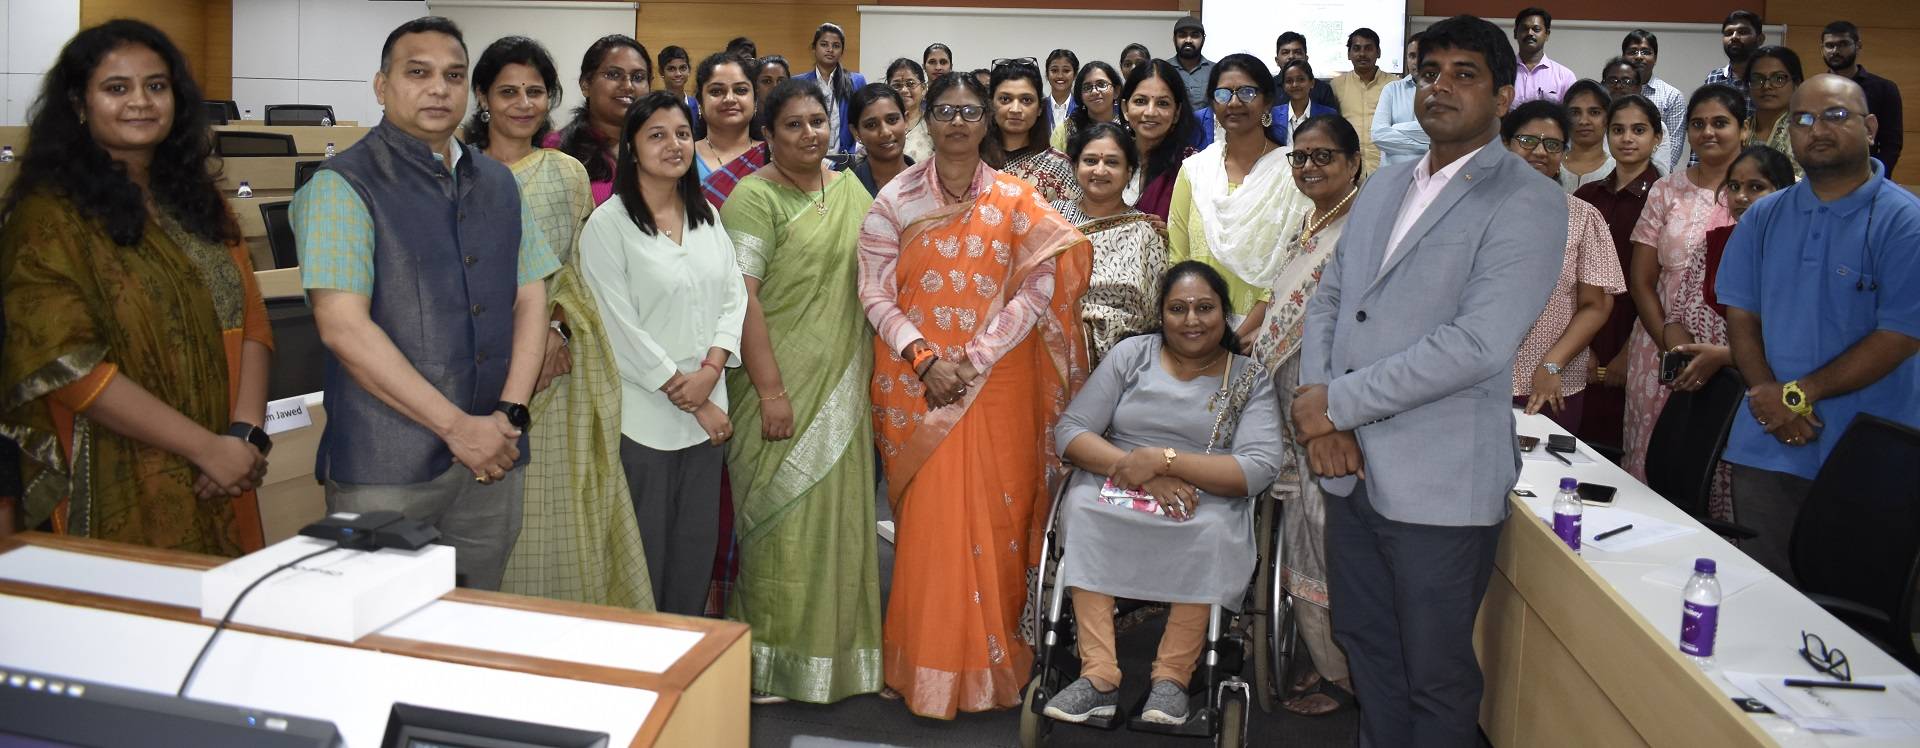 Inspiring Women Entrepreneurs: IIM Visakhapatnam & APIS Host Workshop on Growth Strategies